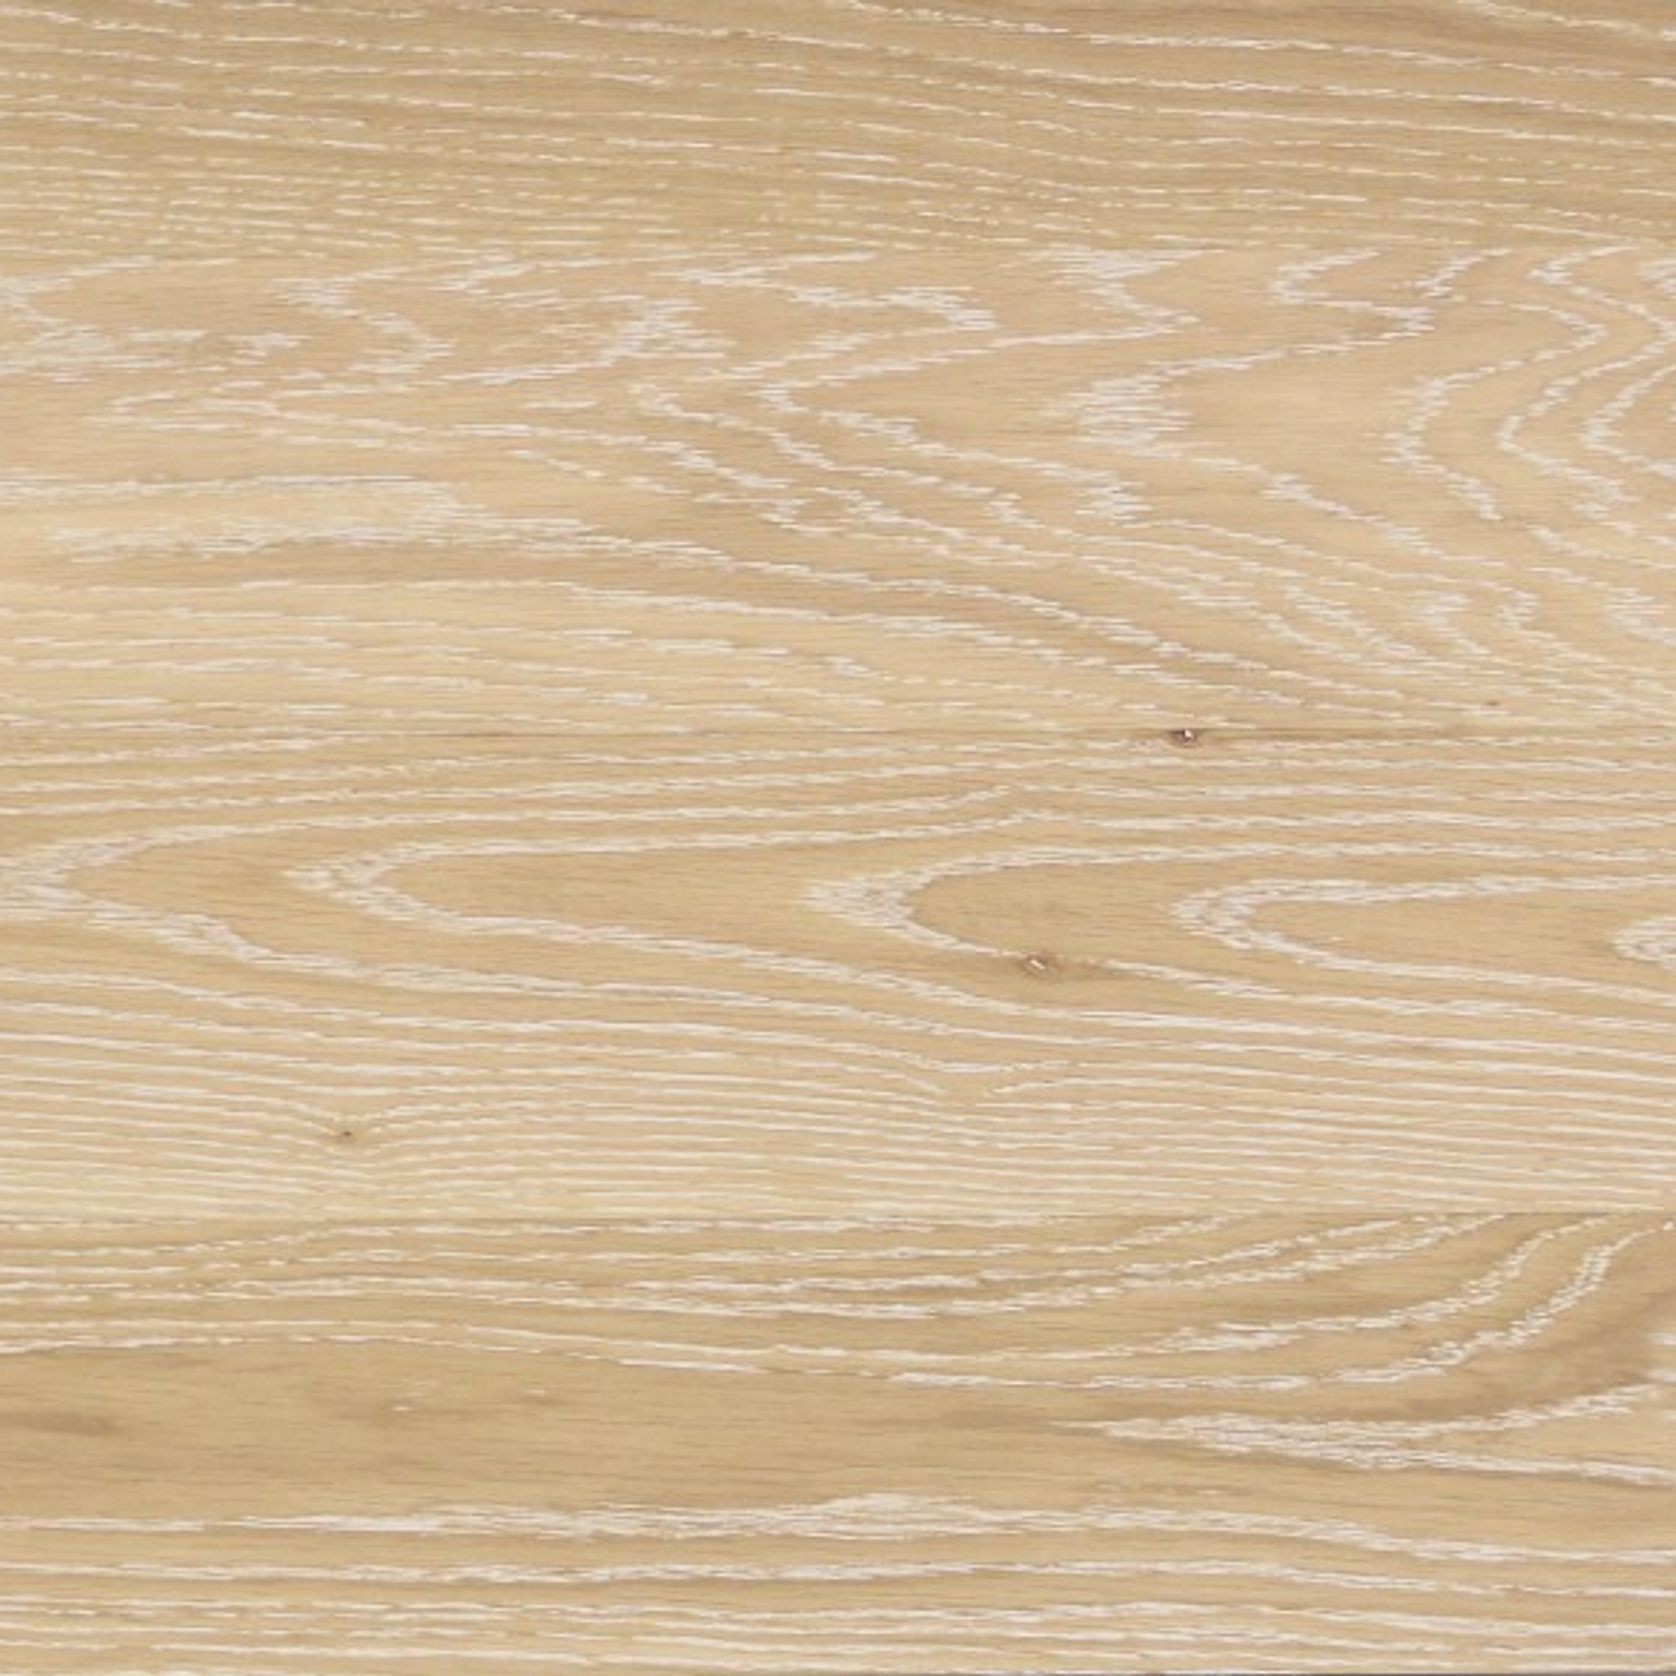 European Oak Flooring - Ivory Pores - Laminate gallery detail image